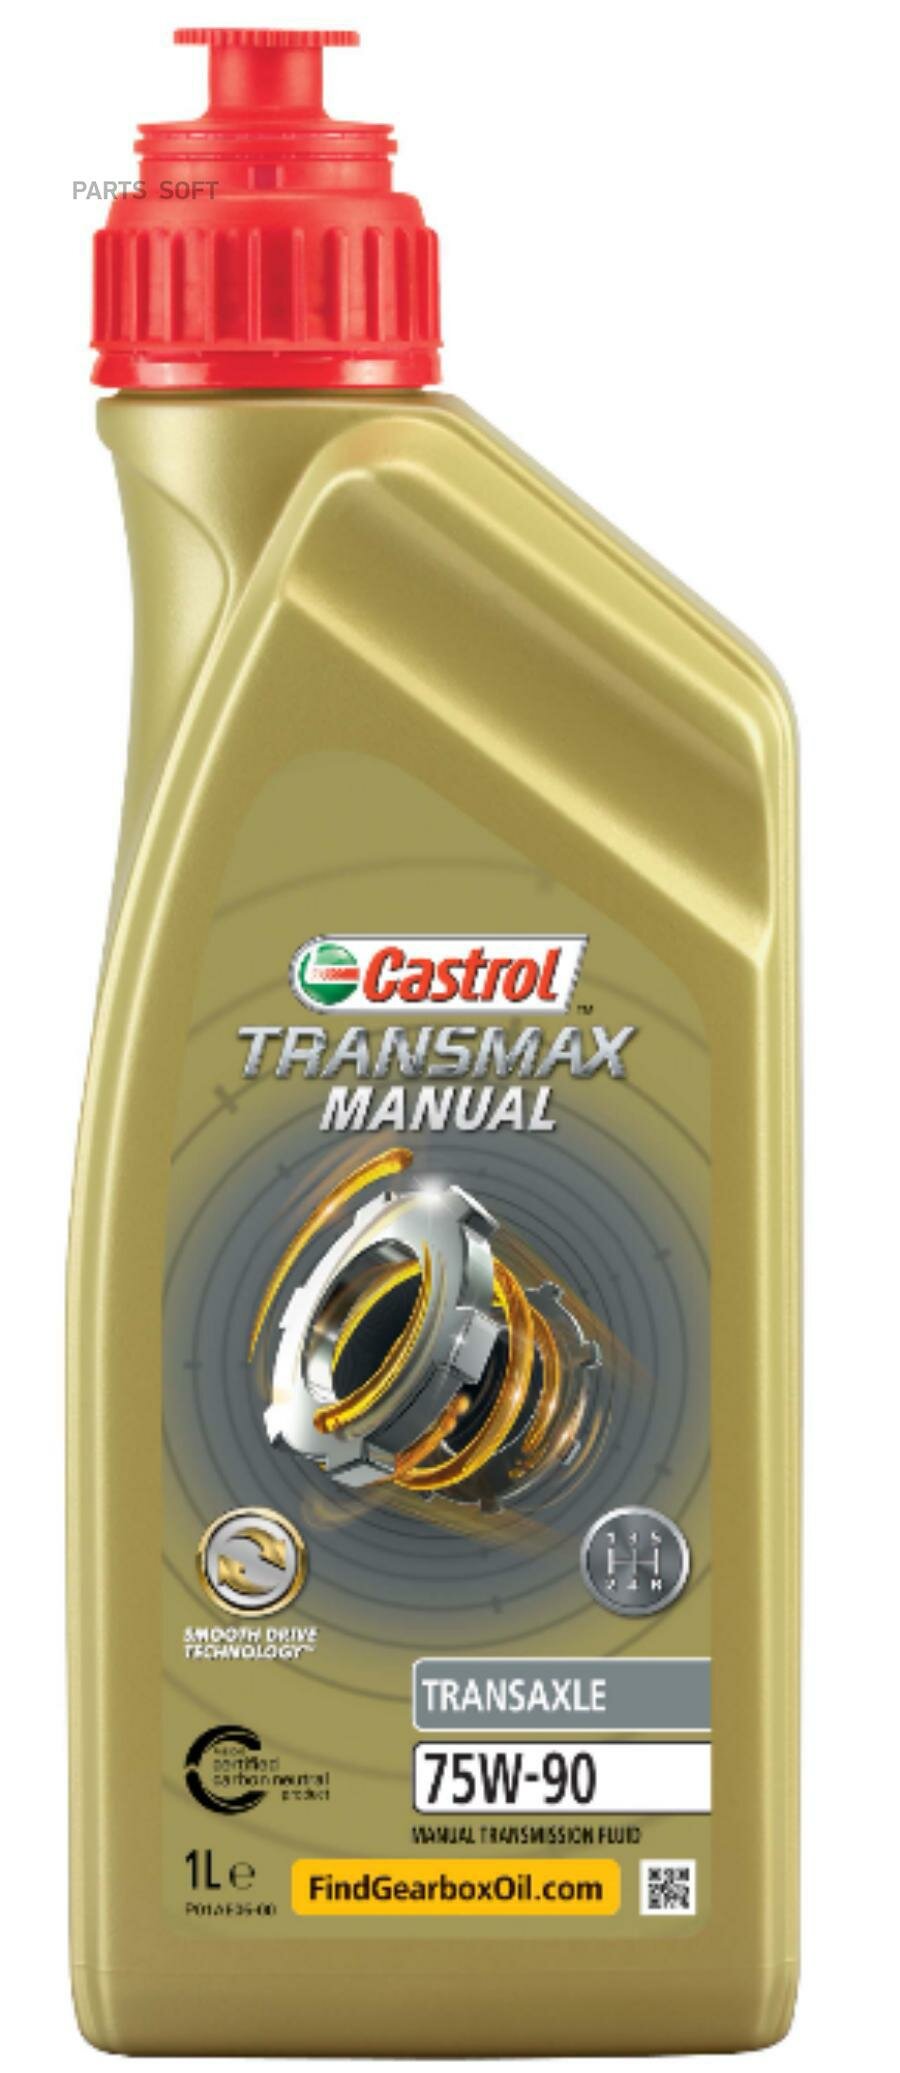 Масло трансм. Transmax Manual Transaxle 75W-90 (1 л.) CASTROL / арт. 15D705 - (1 шт)